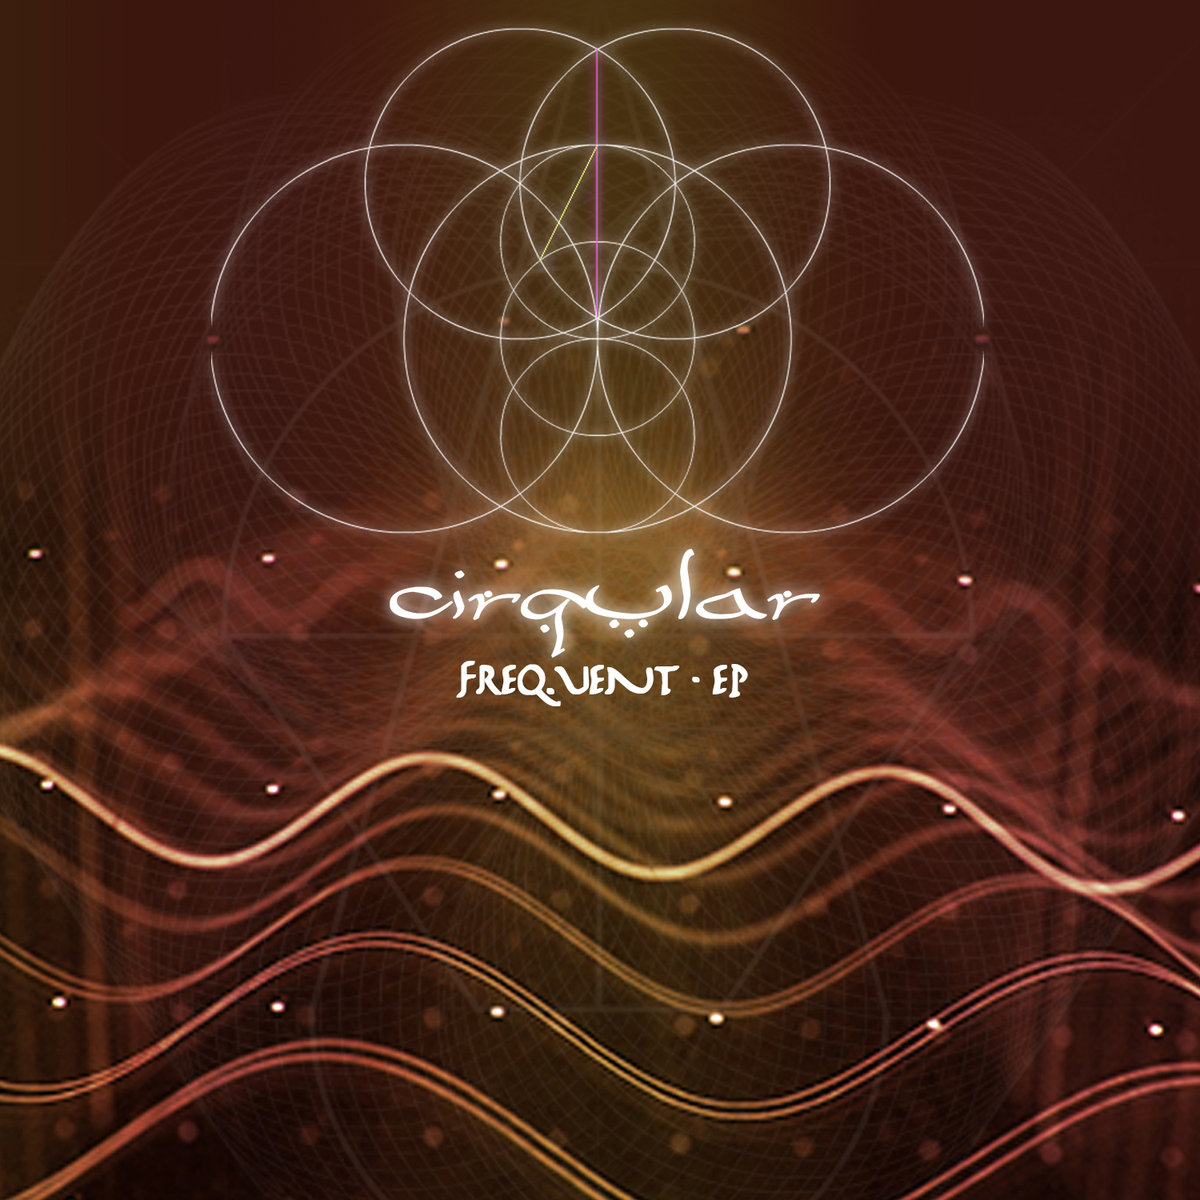 Cirqular - Neutral @ 'Freq.uent' album (bass, electronic)